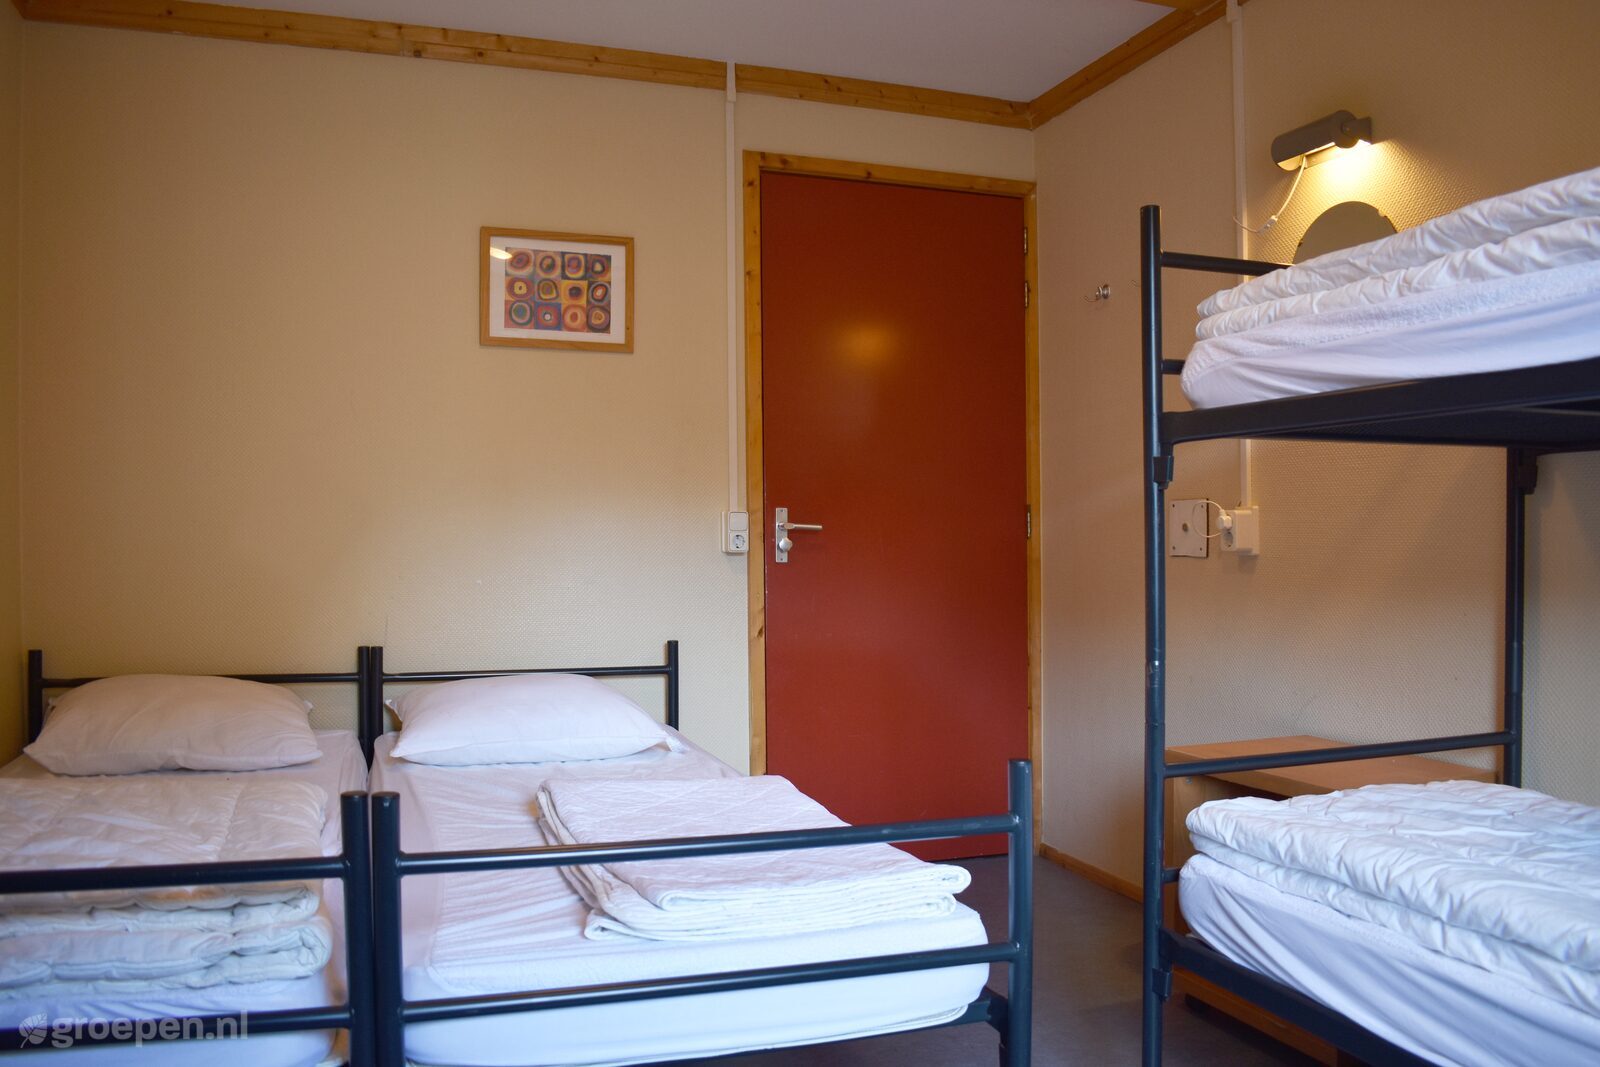 Group accommodation Kraggenburg